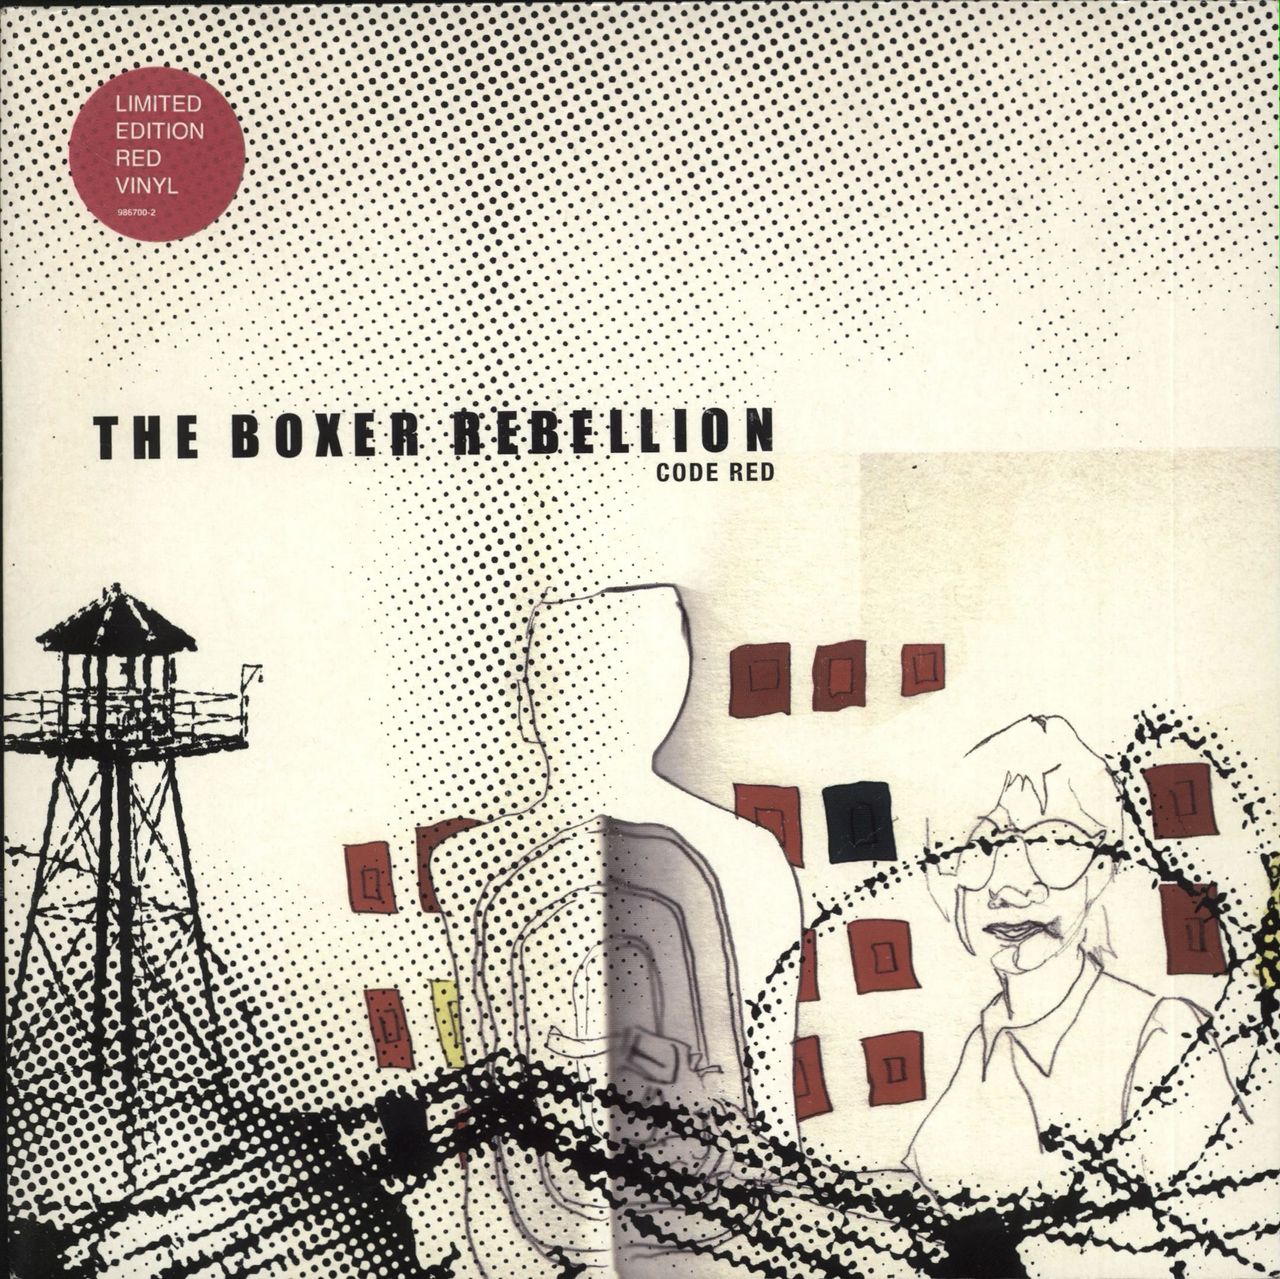 The Rebellion Code Red - Red Vinyl UK 7" vinyl — RareVinyl.com